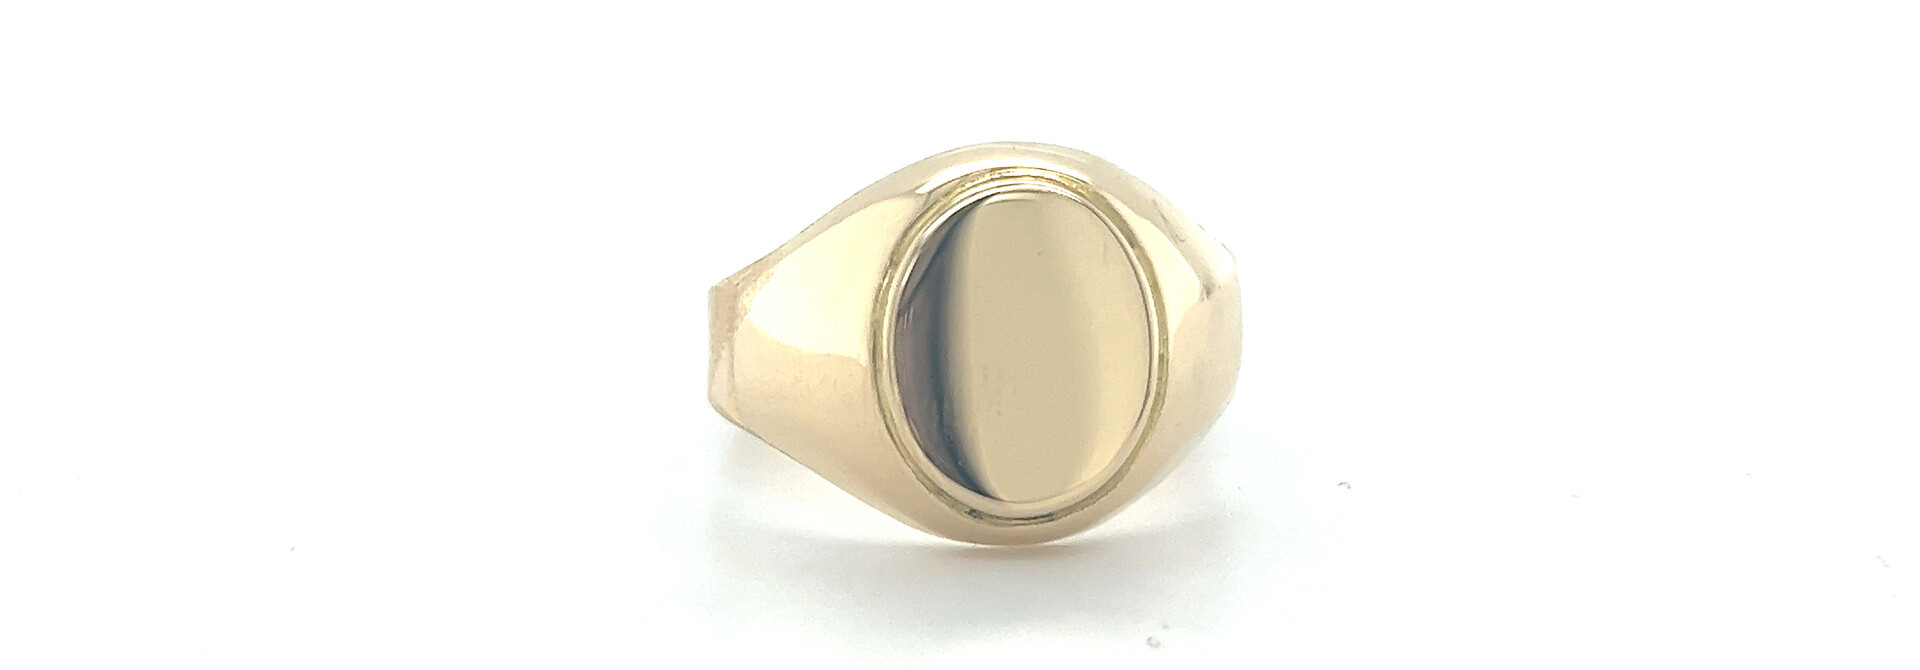 Ring ovale zegel met ingezette rand